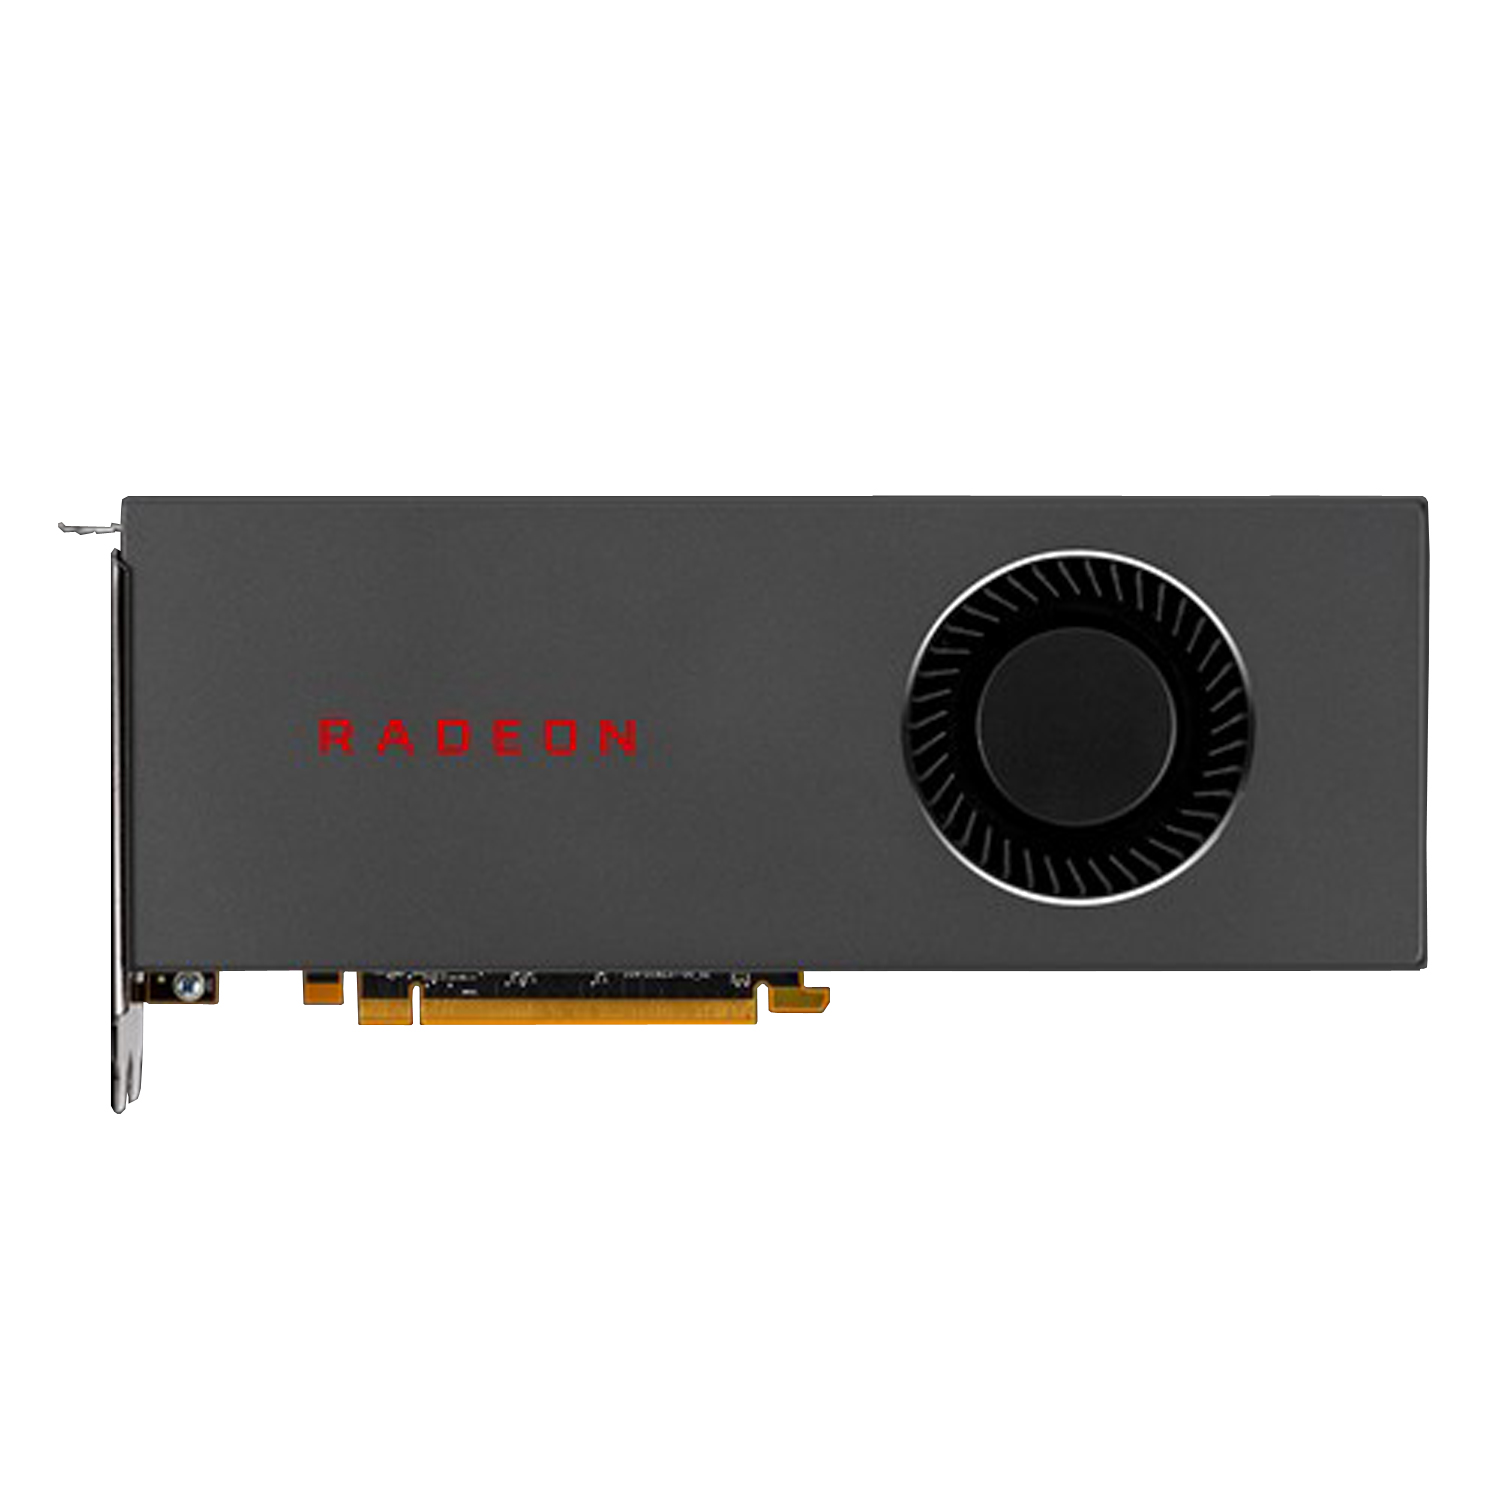 ASUS AMD Radeon RX 5700 Graphics Card, Black - image 1 of 4